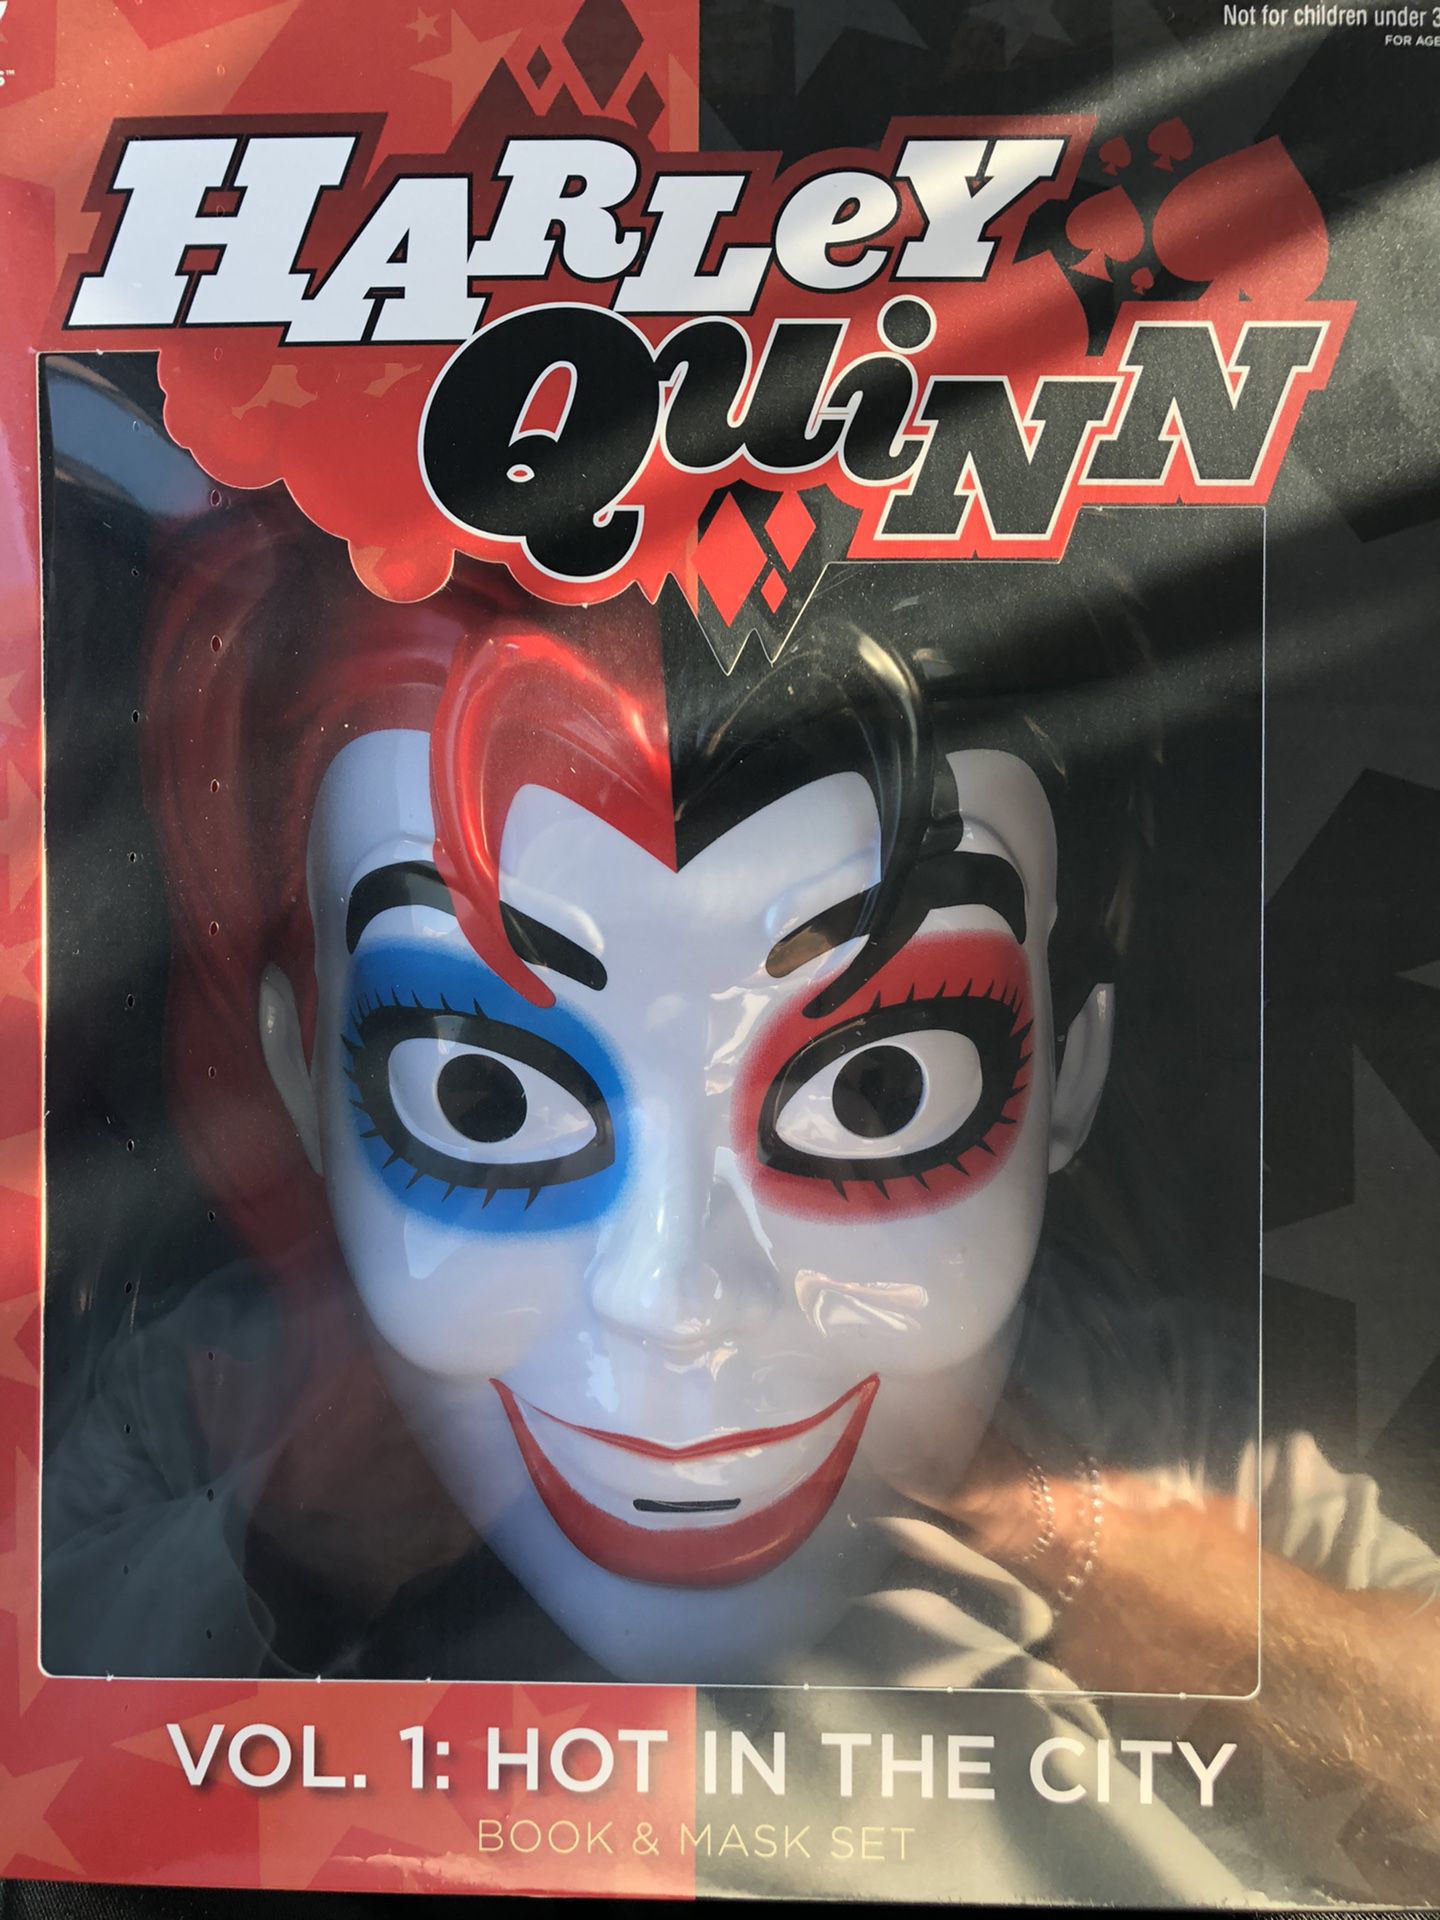 Harley Quinn mask and book set